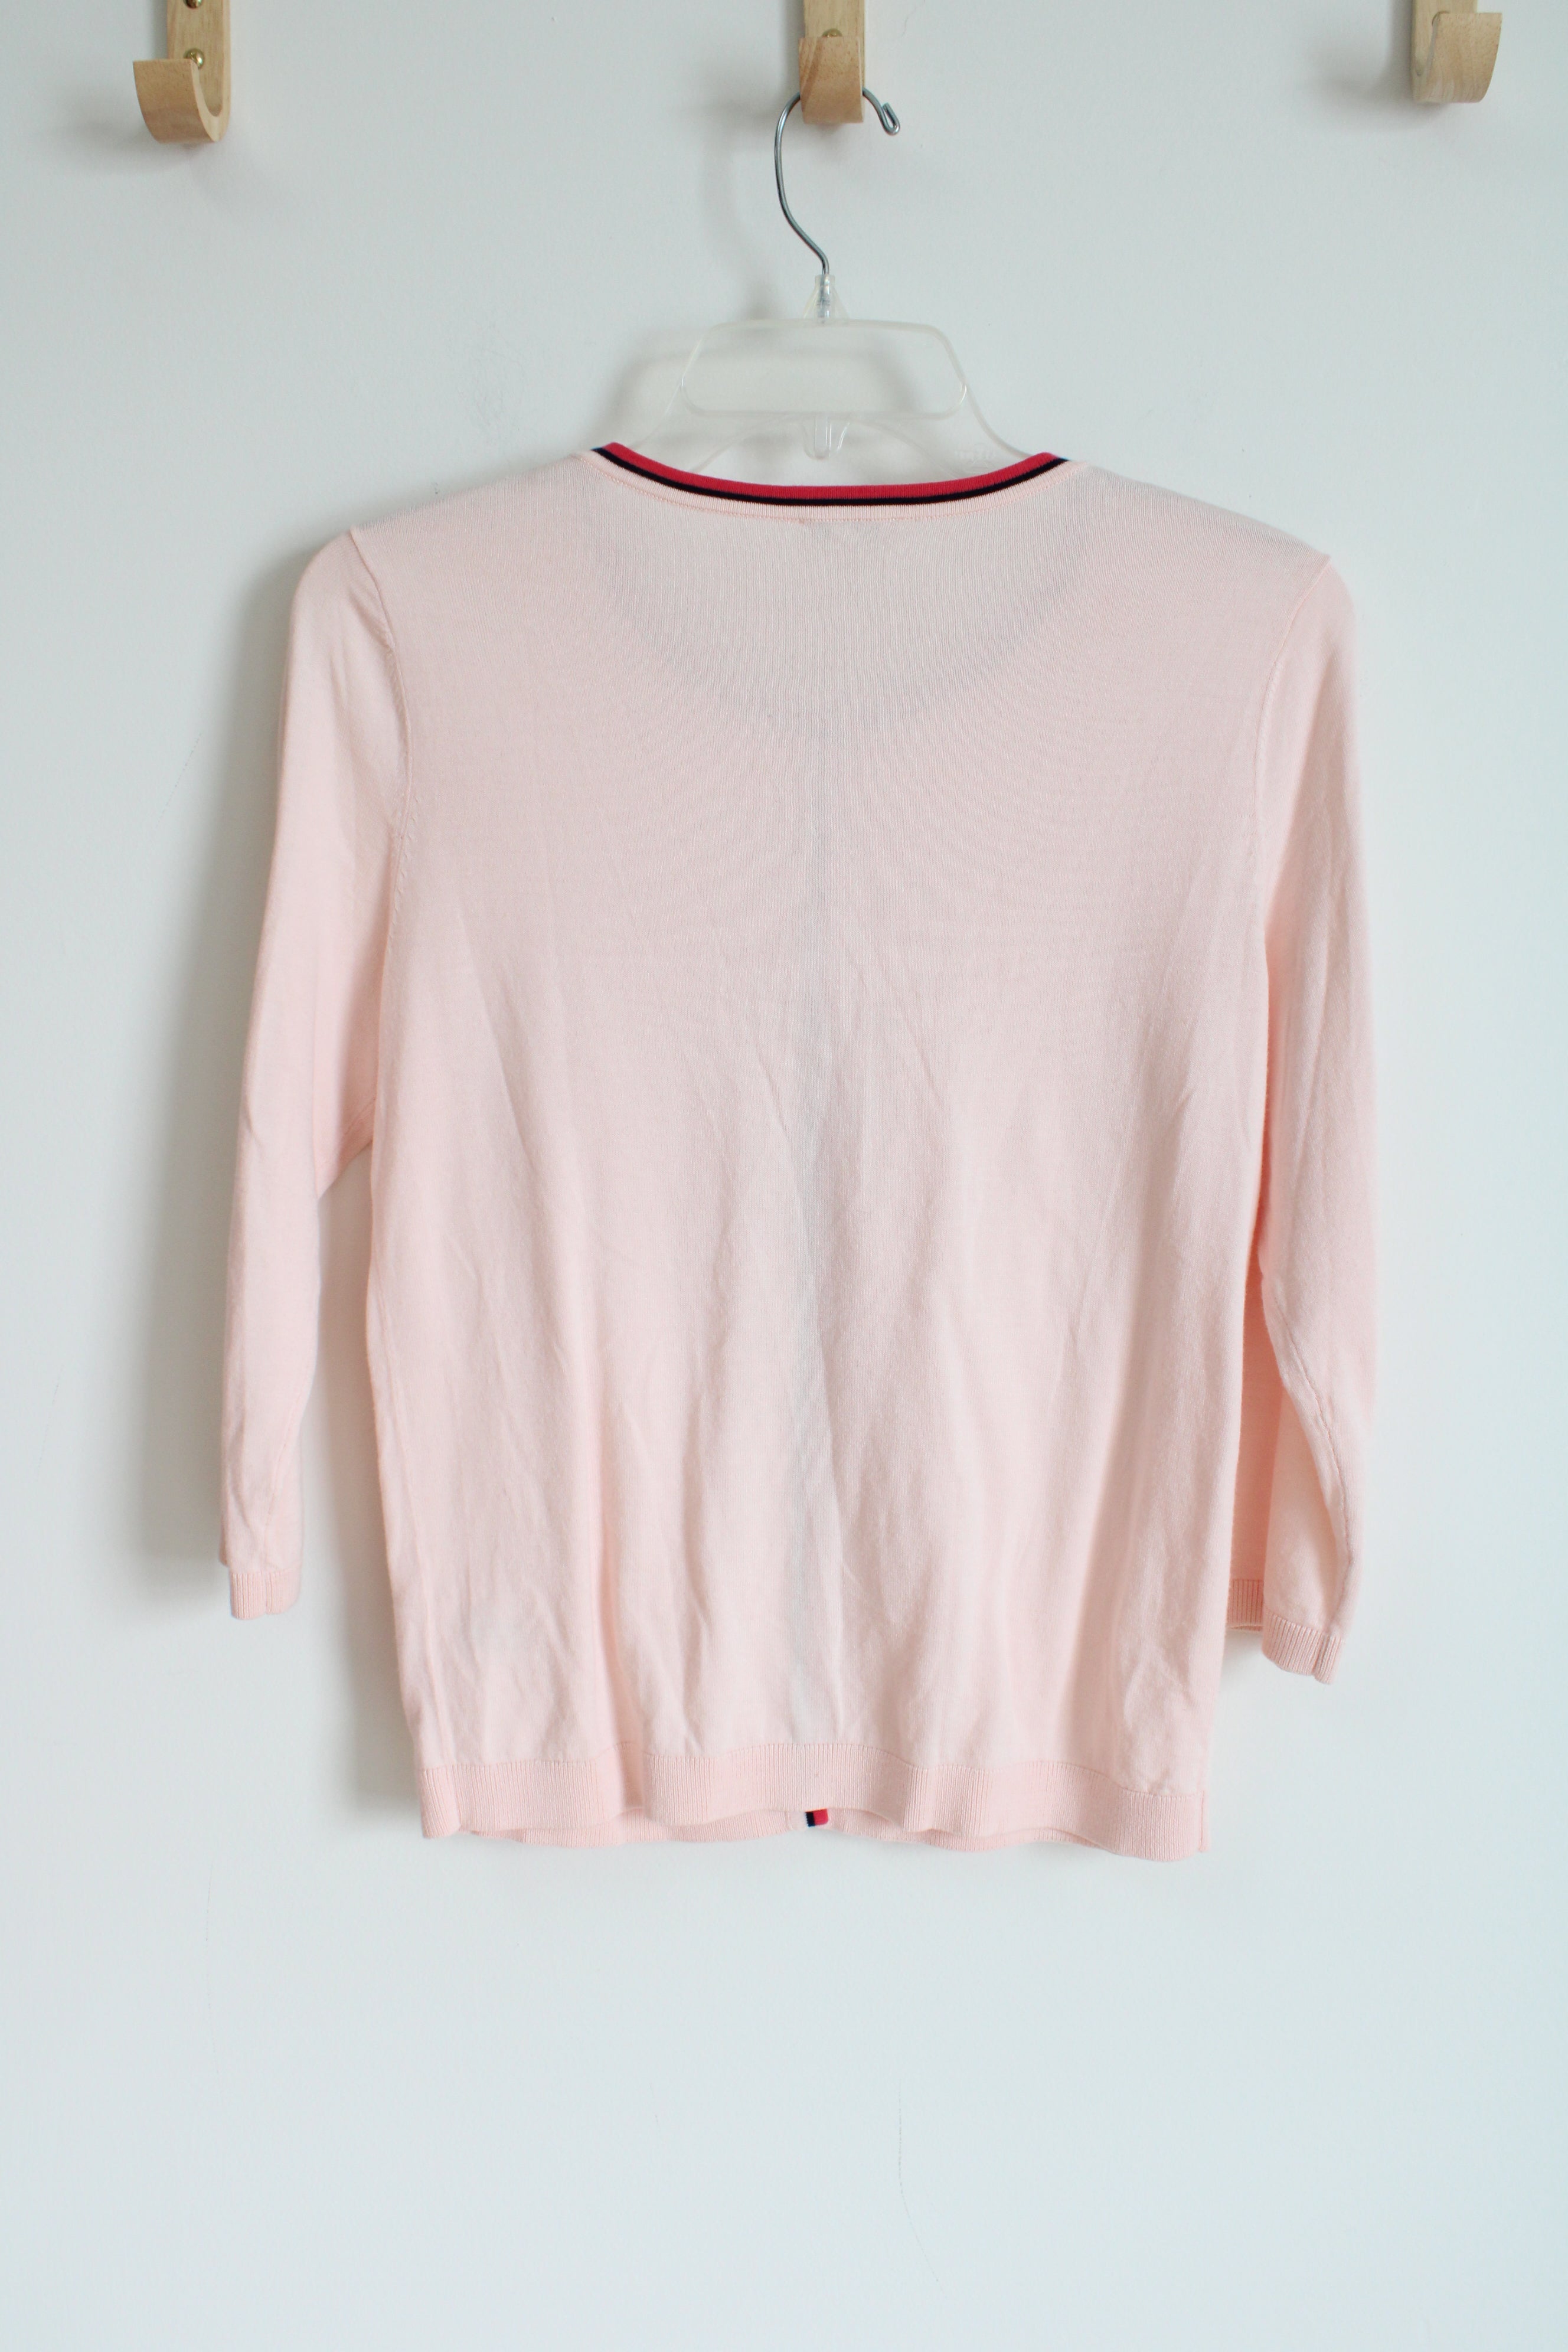 Talbots Light Pink Knit Cardigan | S Petite